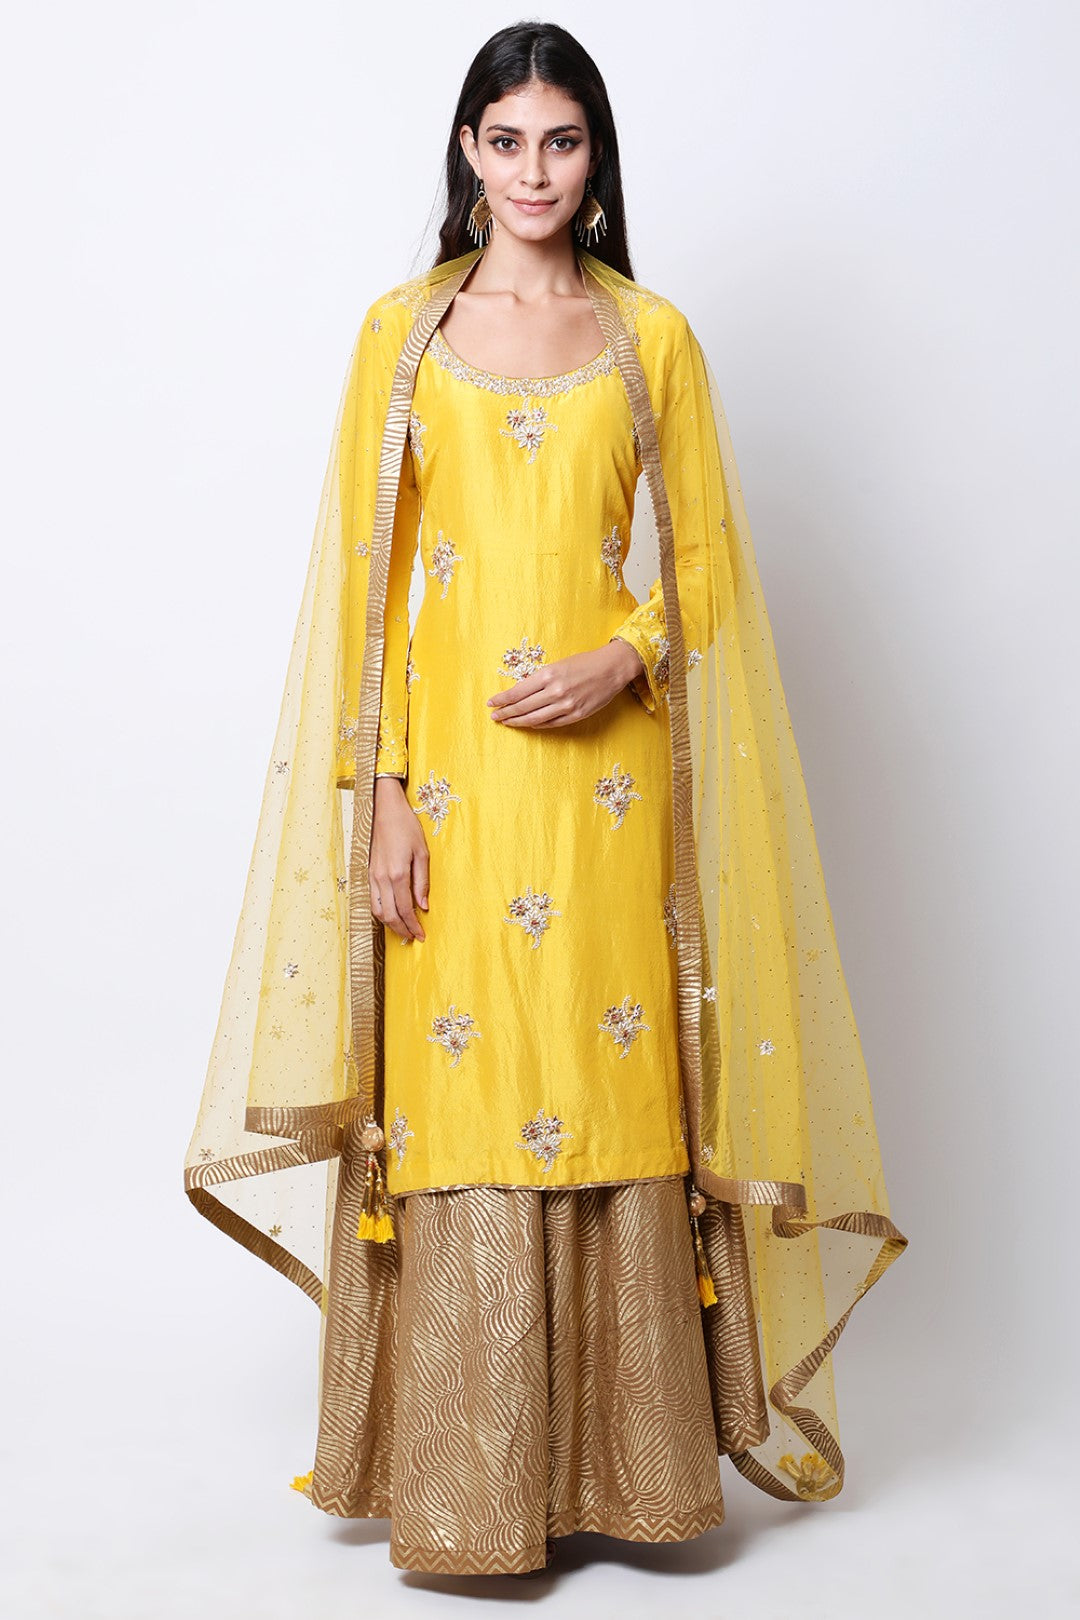 yellow silk kurta with mukesh embellished dupatta and tabacco swirl gold printed wide leg pants.